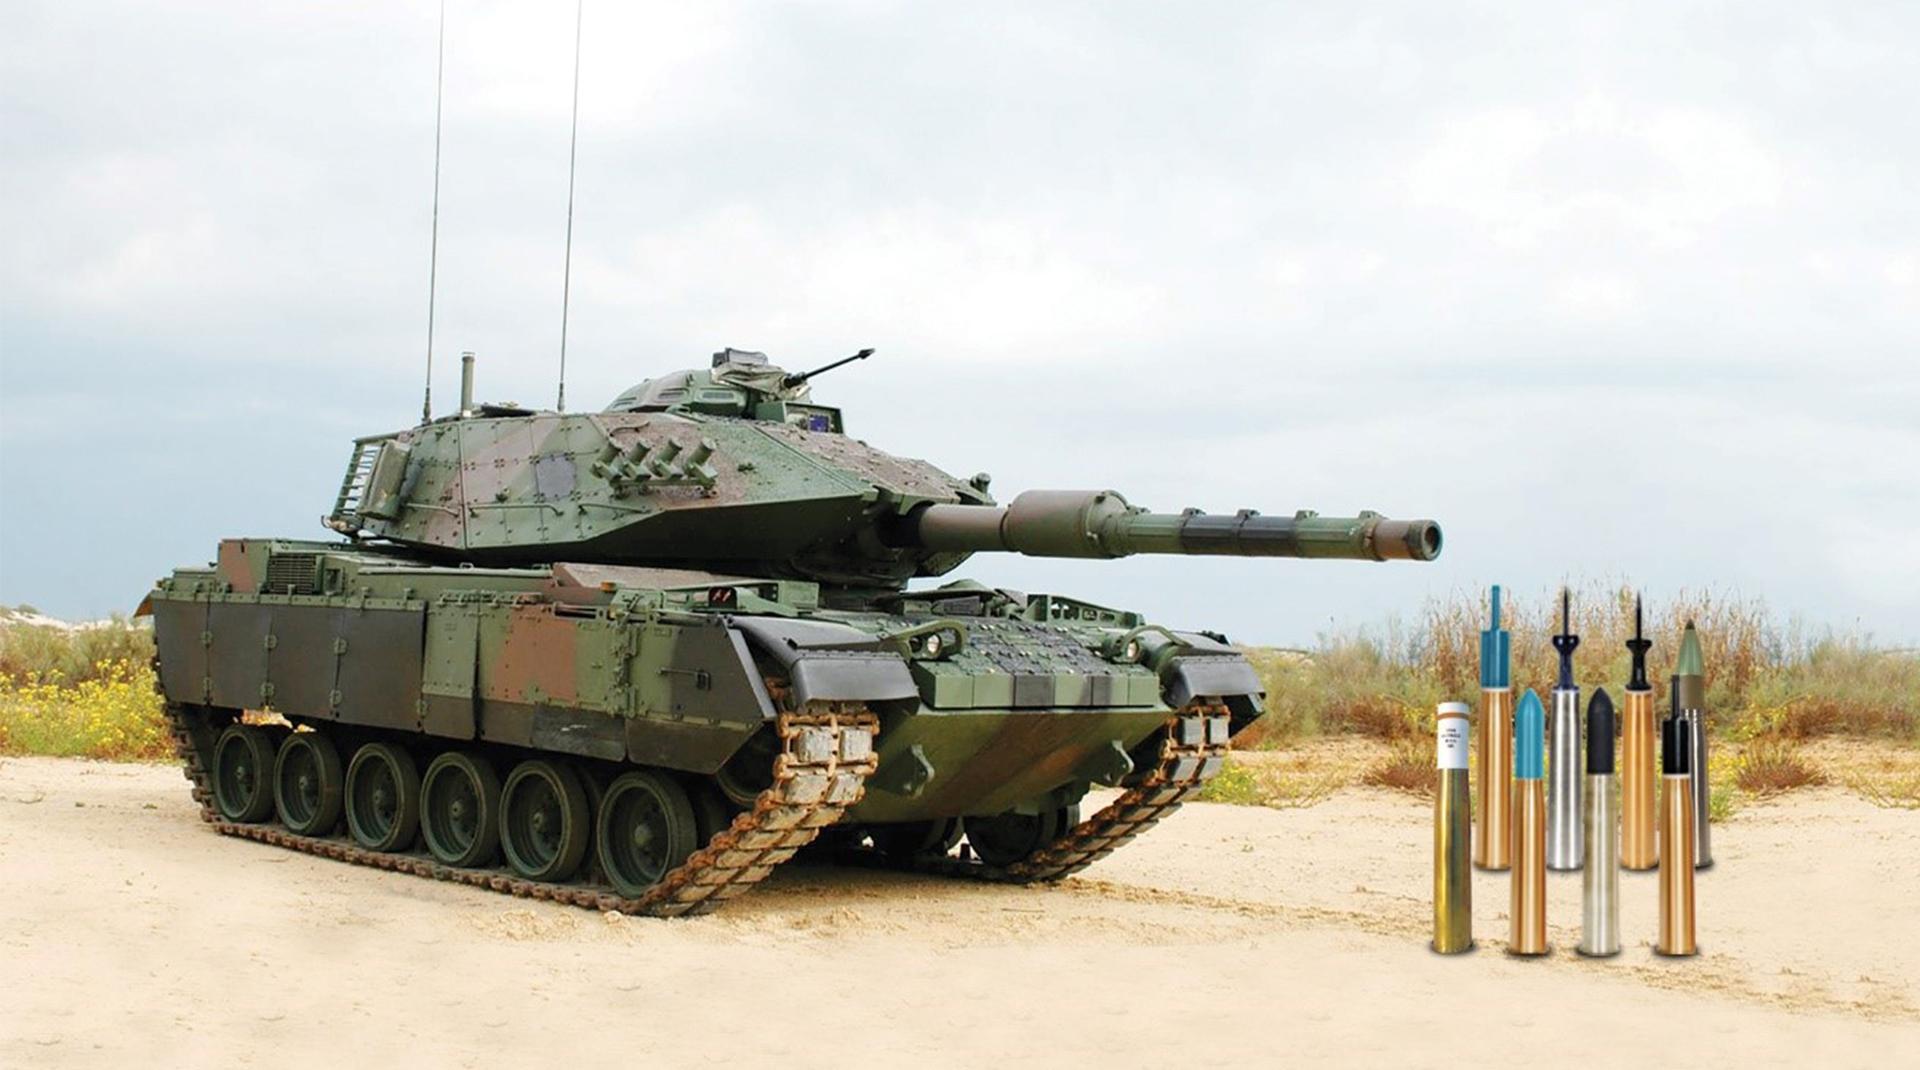 105mm M1 NATO HE Artillery Shell w/ Fuze - Inert Replica - Inert Products  LLC